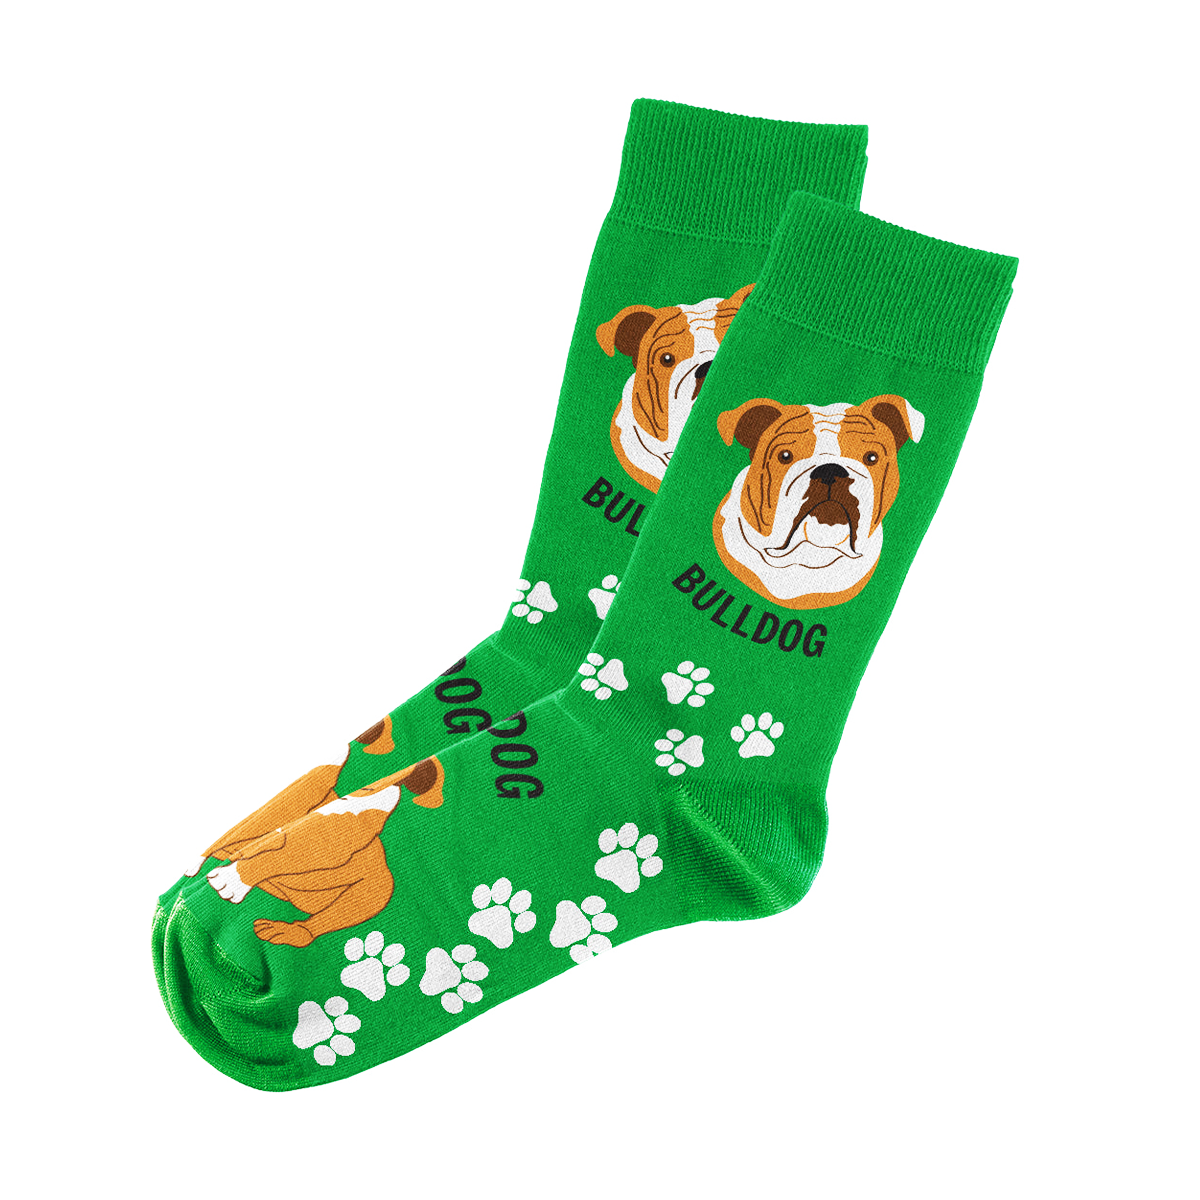 Bulldog Socks Unisex Unique Fun Design   Fits All, 70% Cotton, 25% Spandex, 5% Elastic